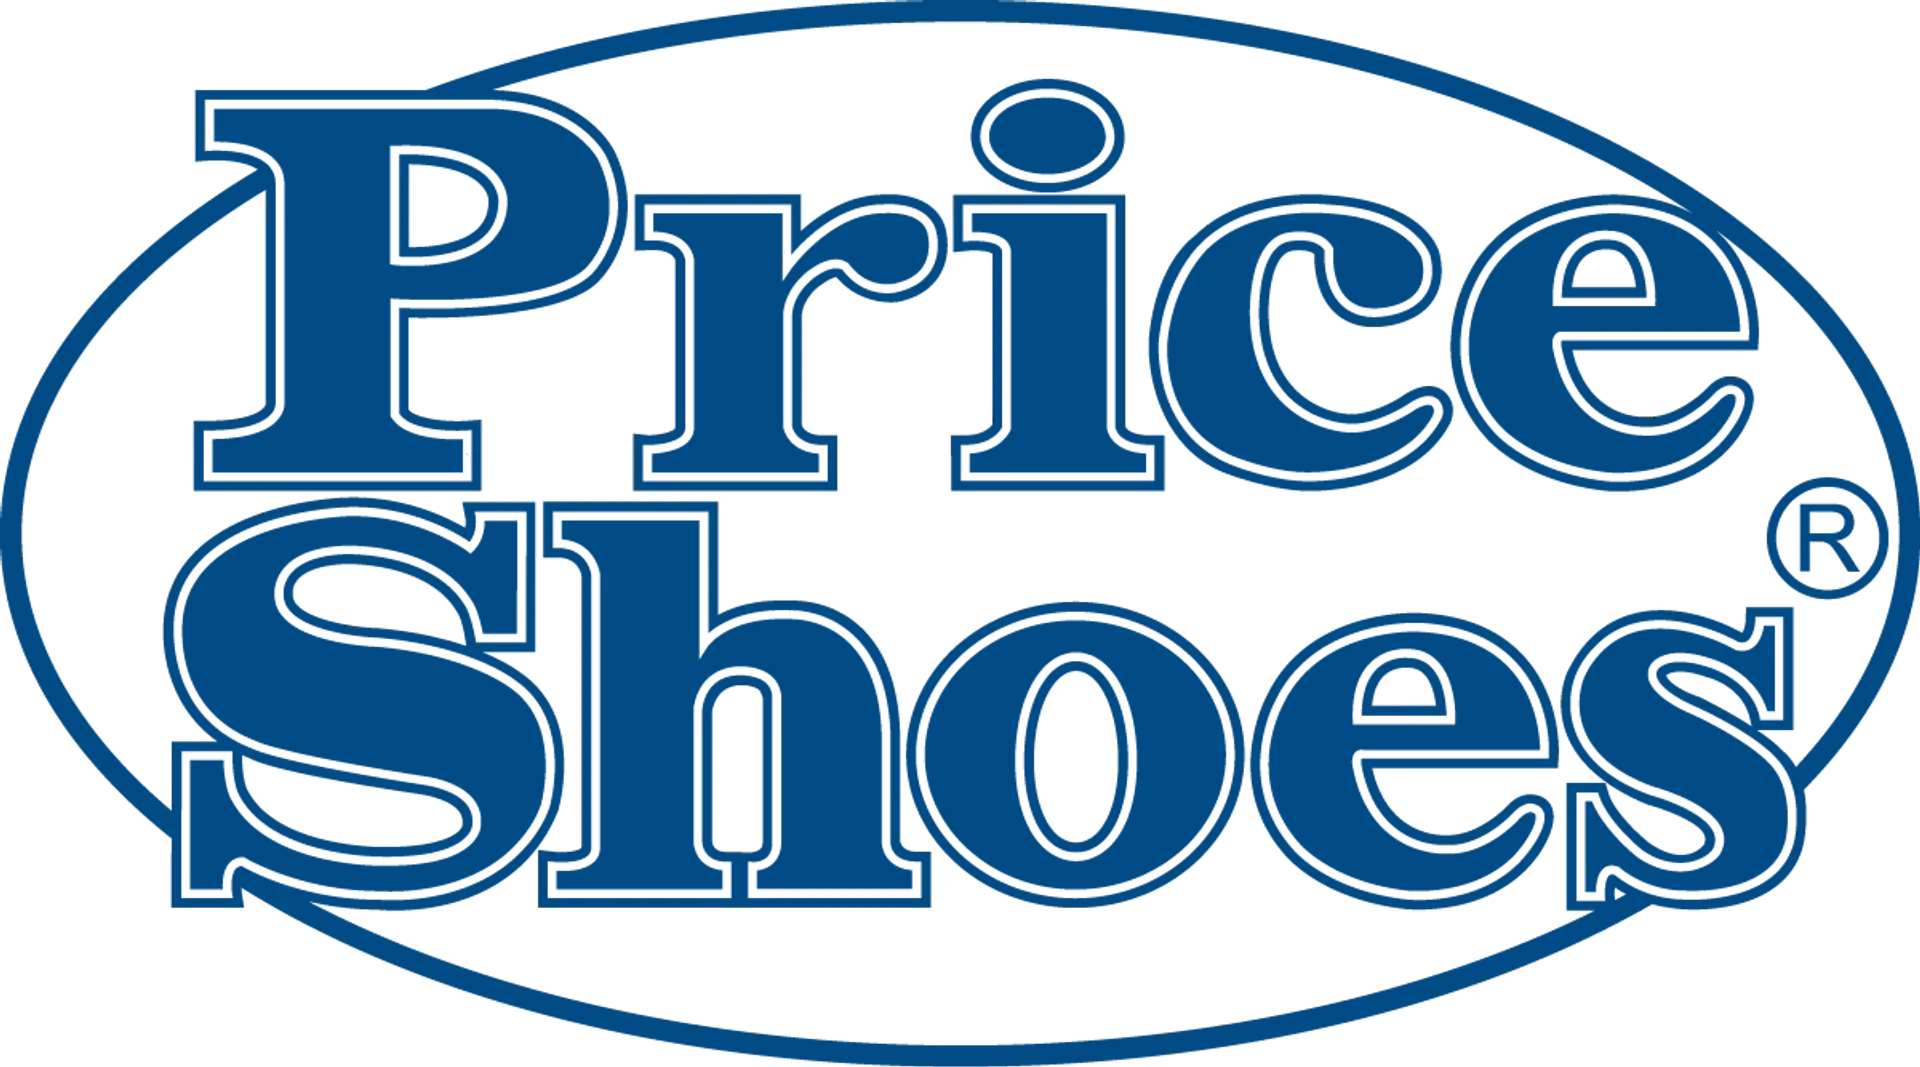 PRICE SHOES logo